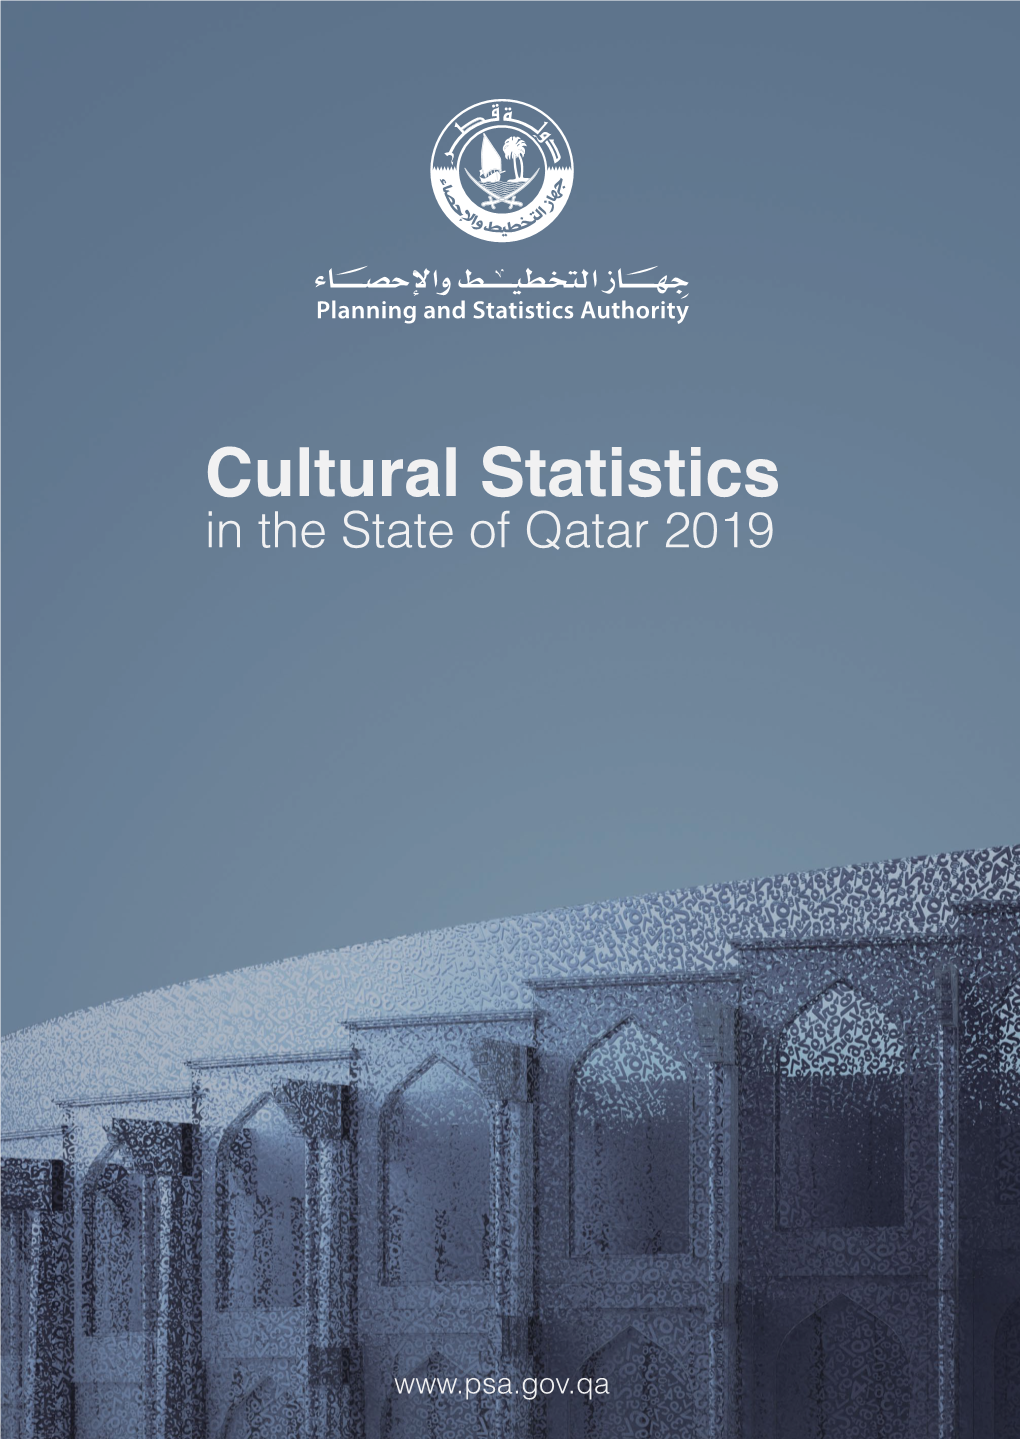 CULTURAL STATISTICS in the State of Qatar 2019